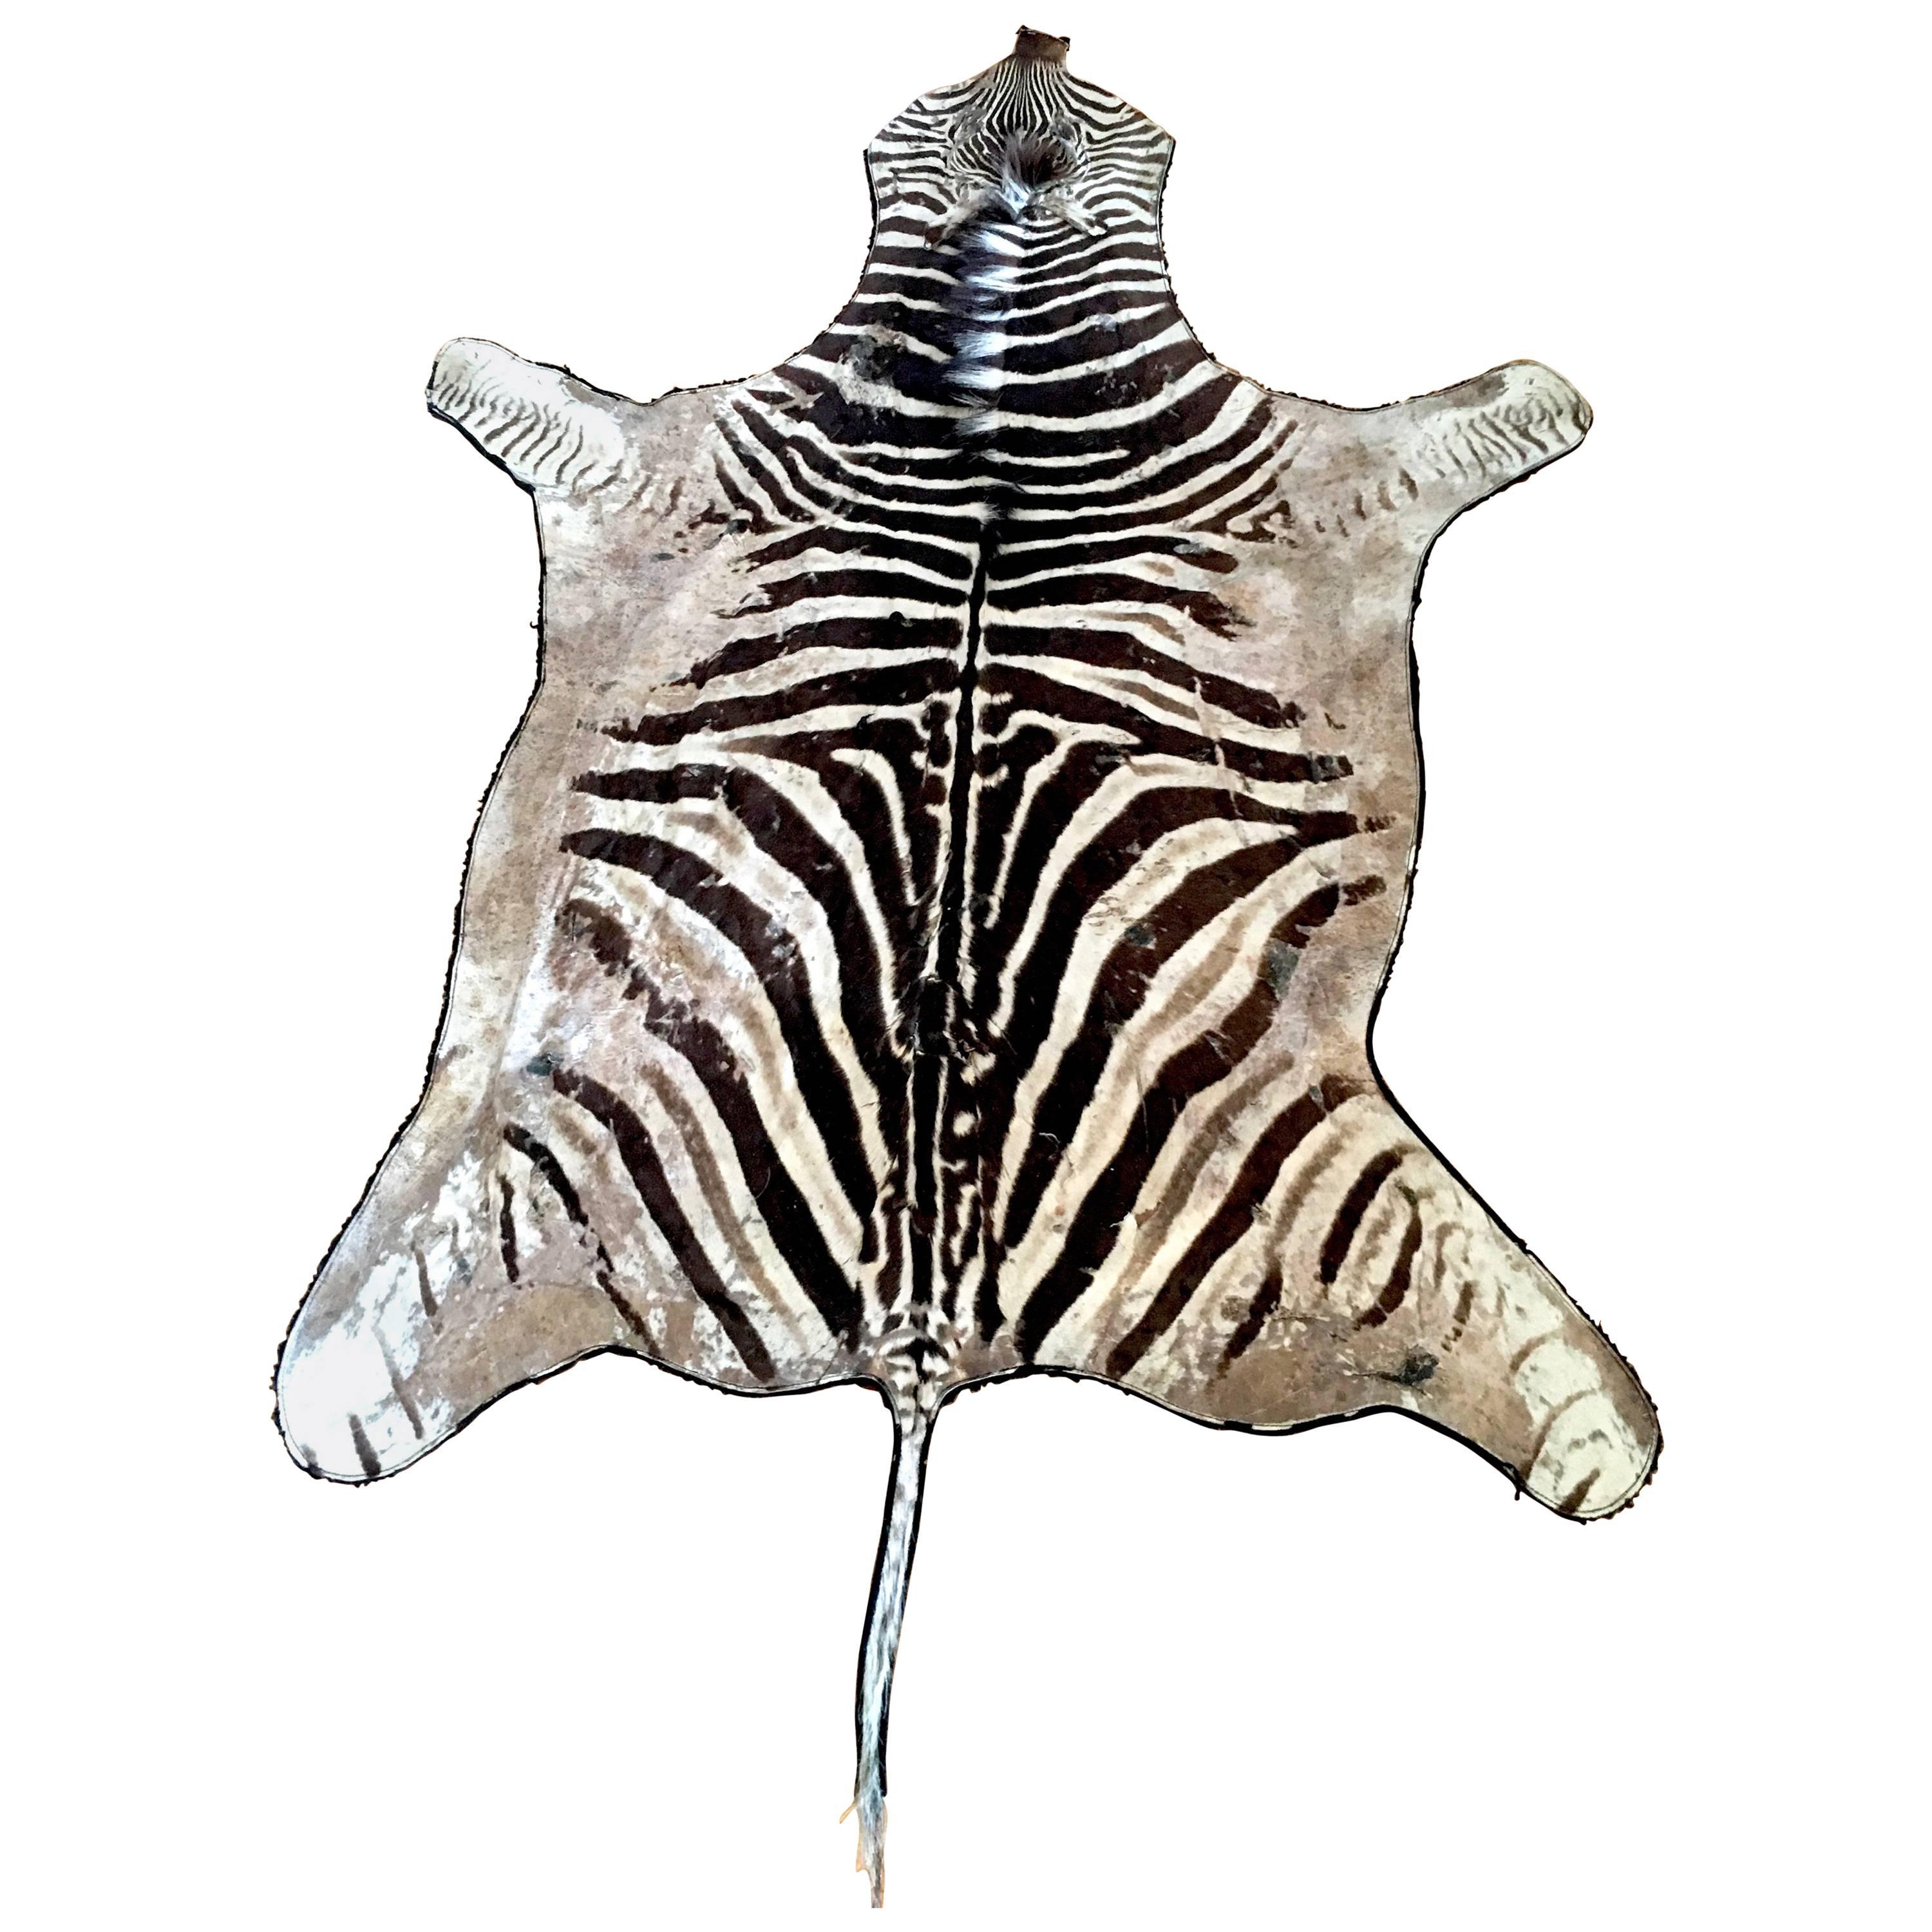 Authentic Vintage Felt Backed Zebra Hide Rug